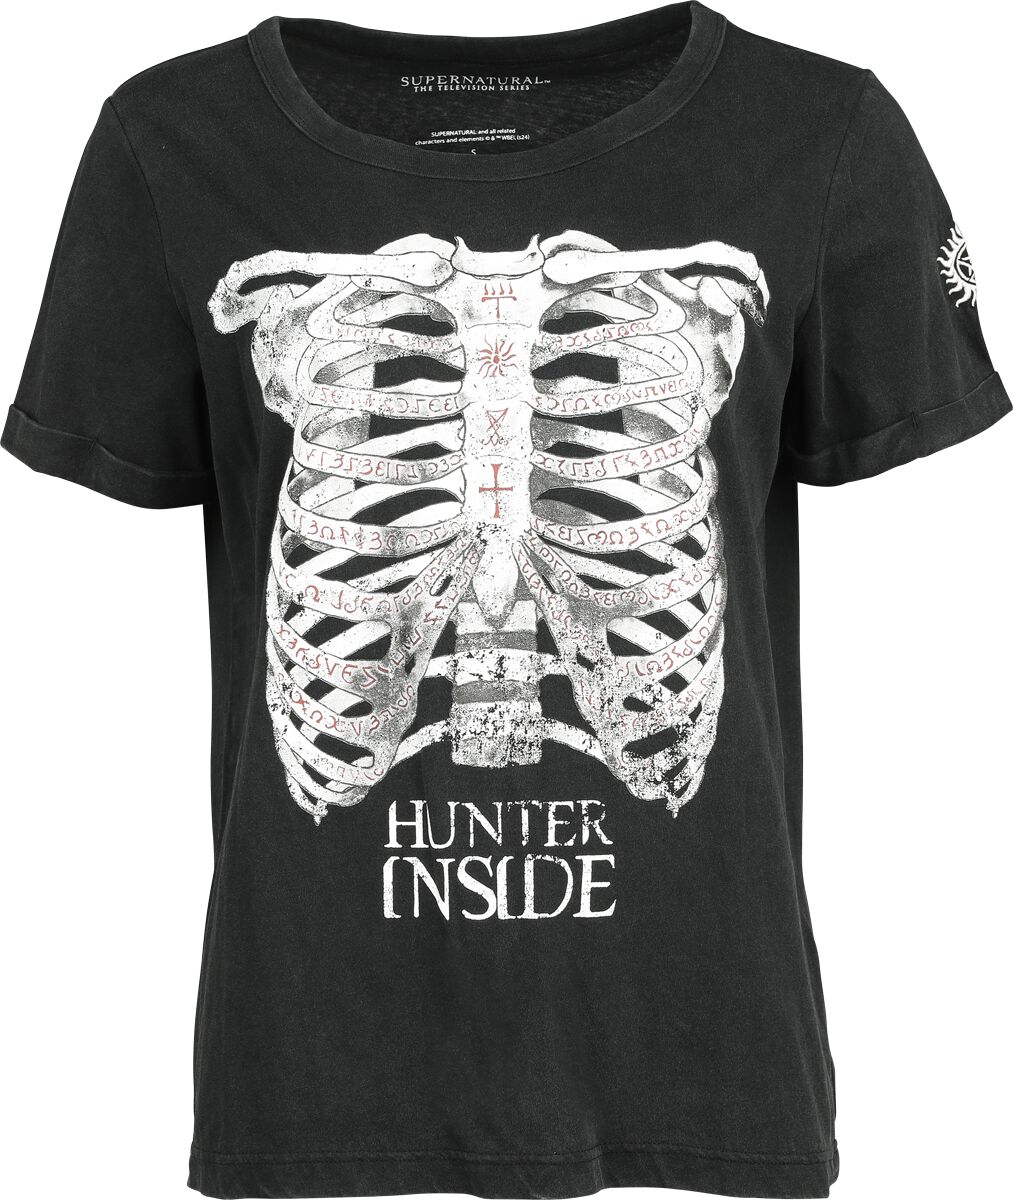 Image of T-Shirt di Supernatural - Hunter Inside - S a XXL - Donna - grigio scuro